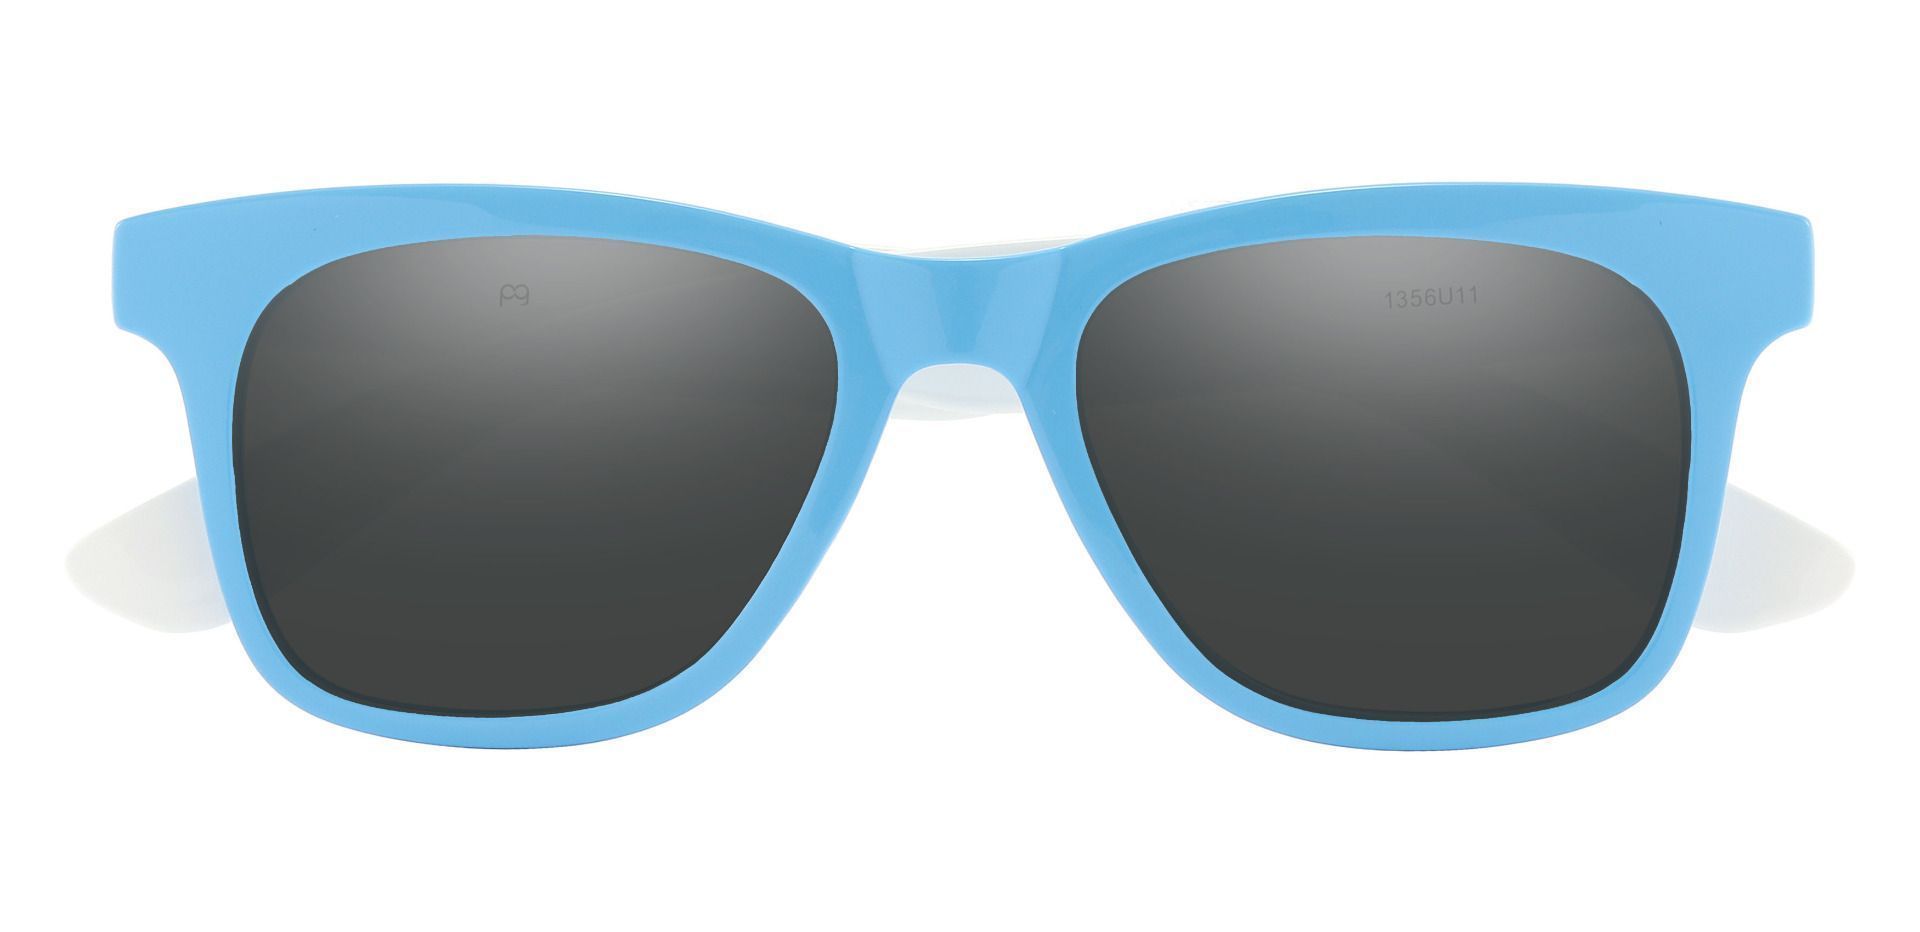 Hurley Square Prescription Sunglasses - Blue Frame With Gray Lenses ...